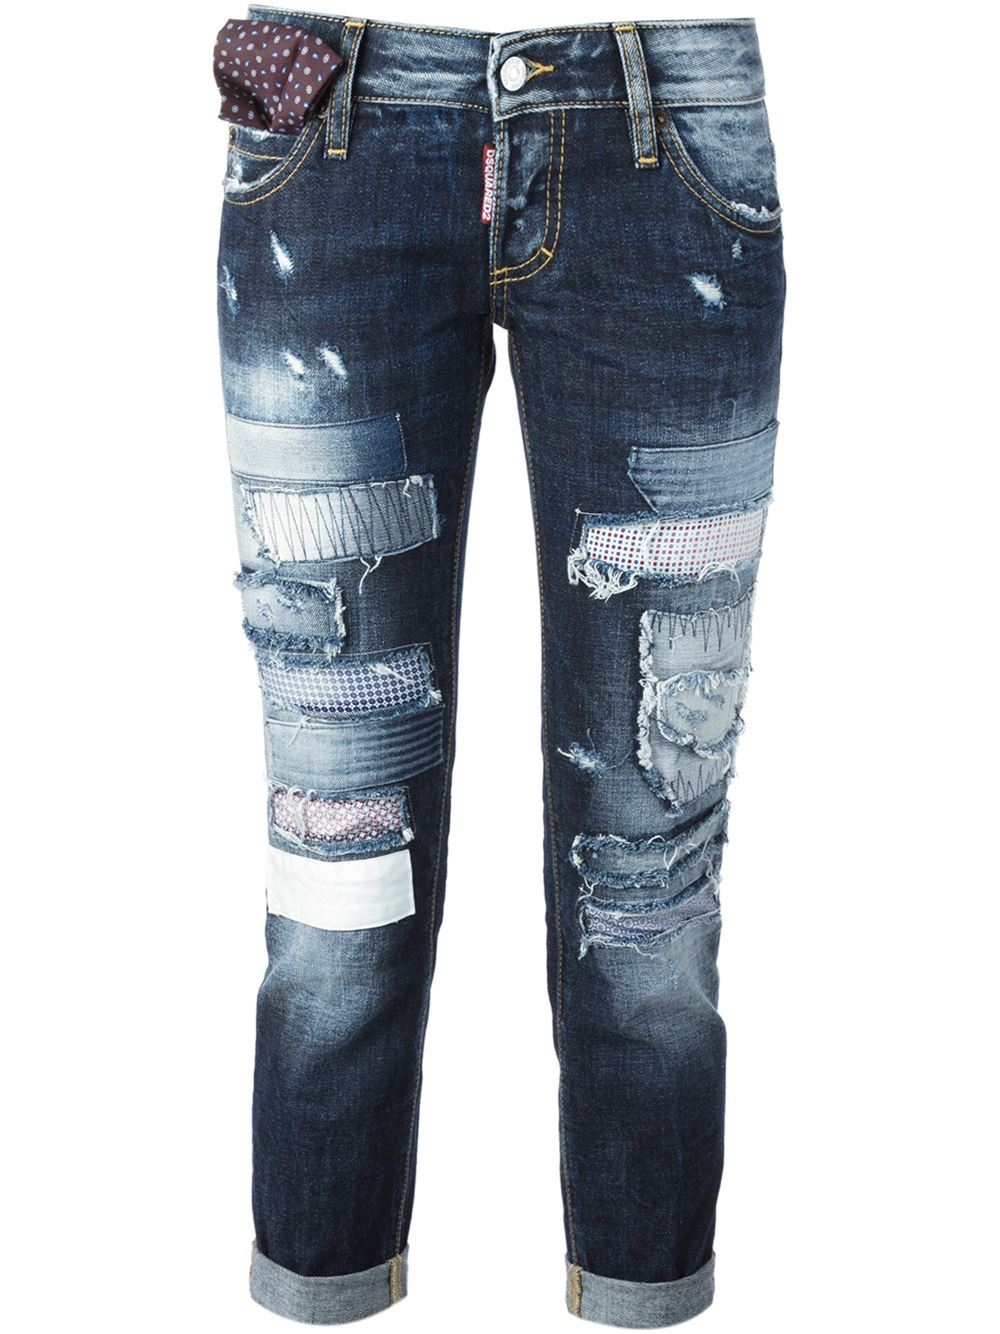 Lyst - Dsquared² Patchwork Denim Jeans in Blue